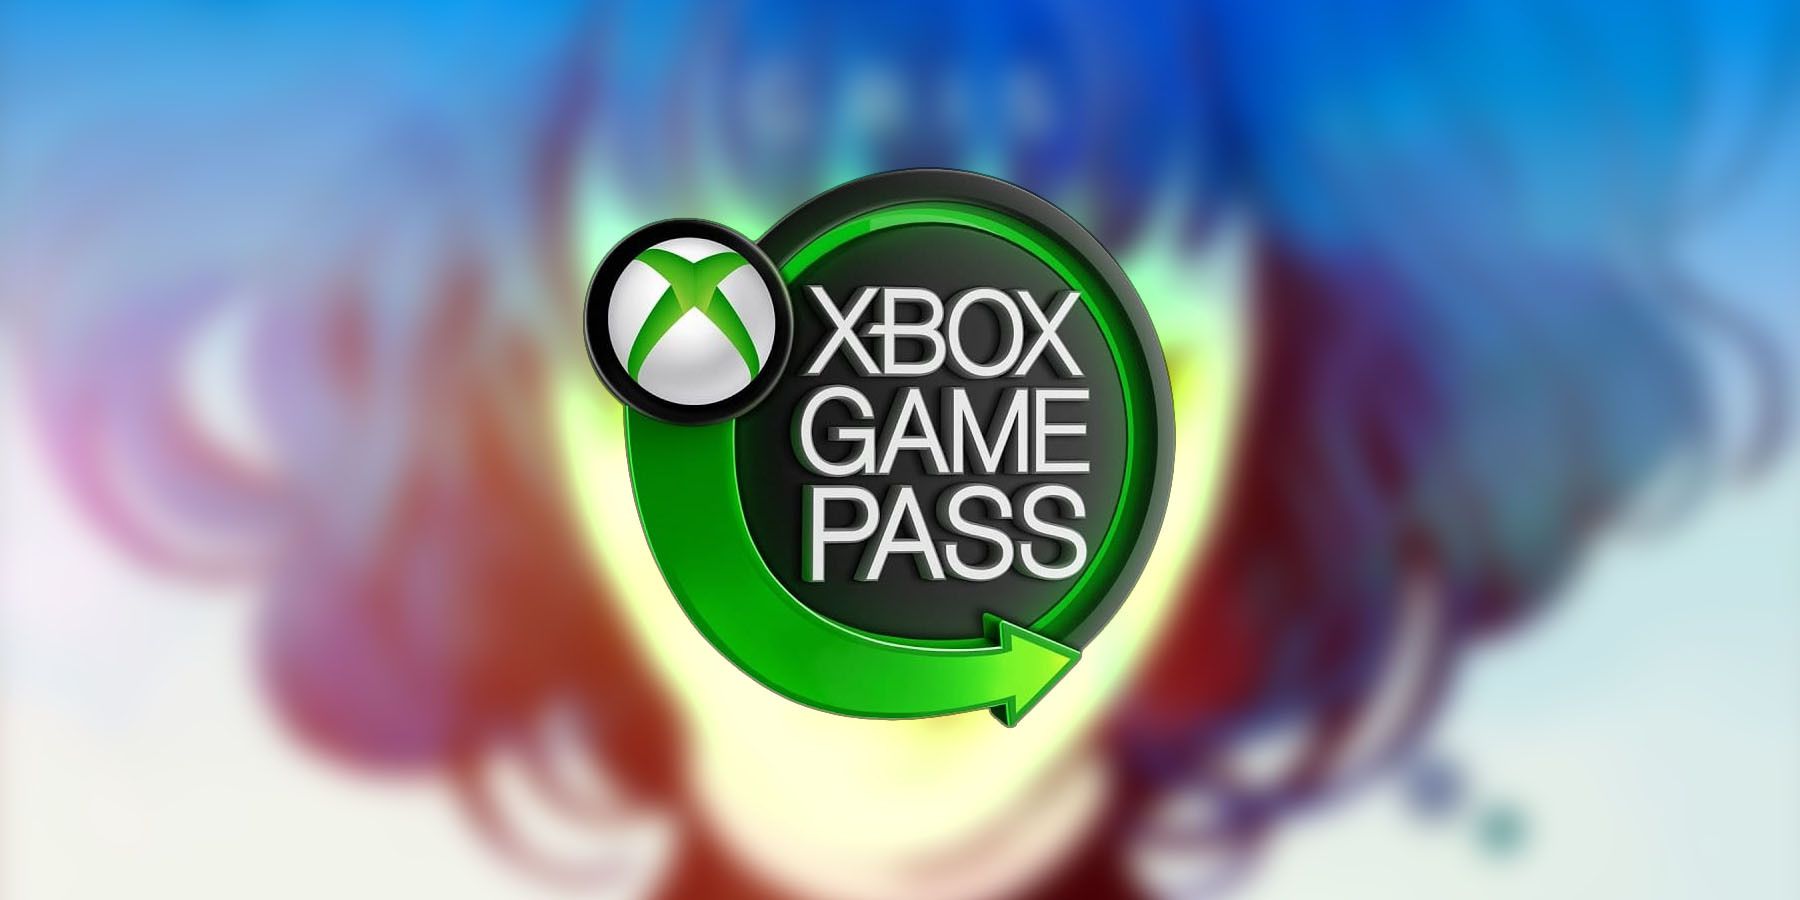 Xbox Game Pass Adding Award-Winning Game for September 2023